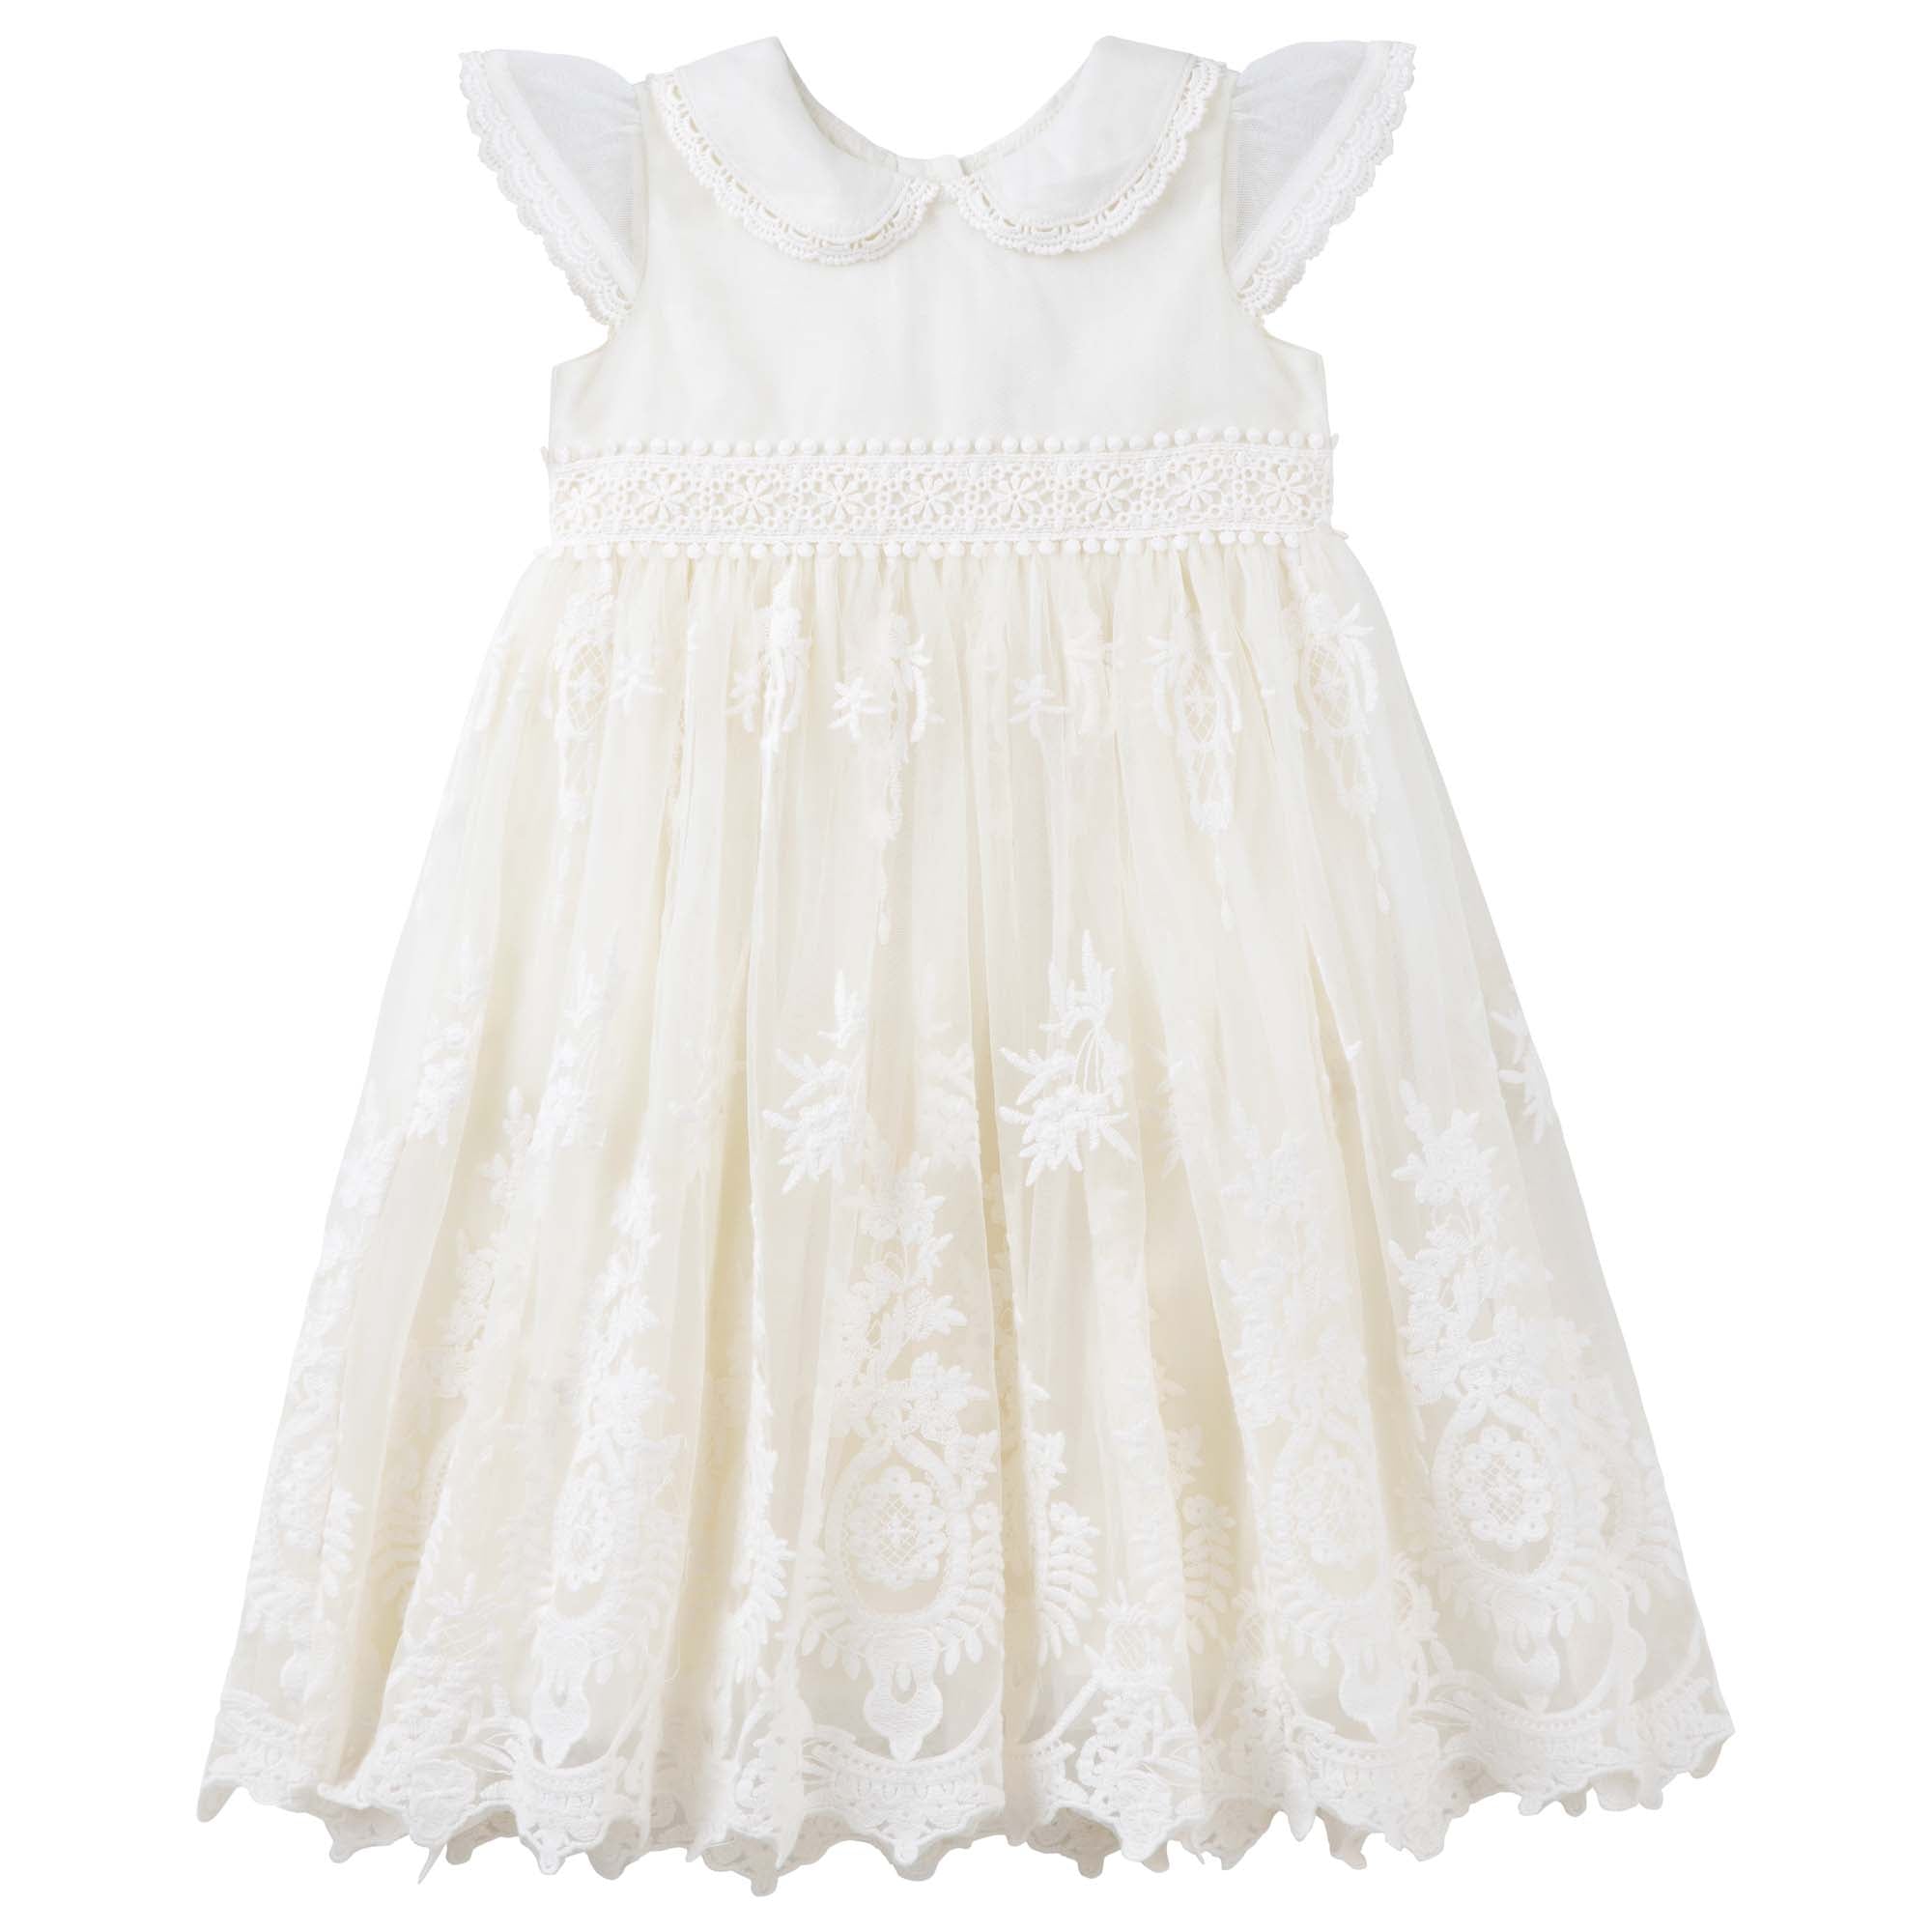 Designer Kidz Ava Antique Lace Christening Gown - Beige | Dresses ...